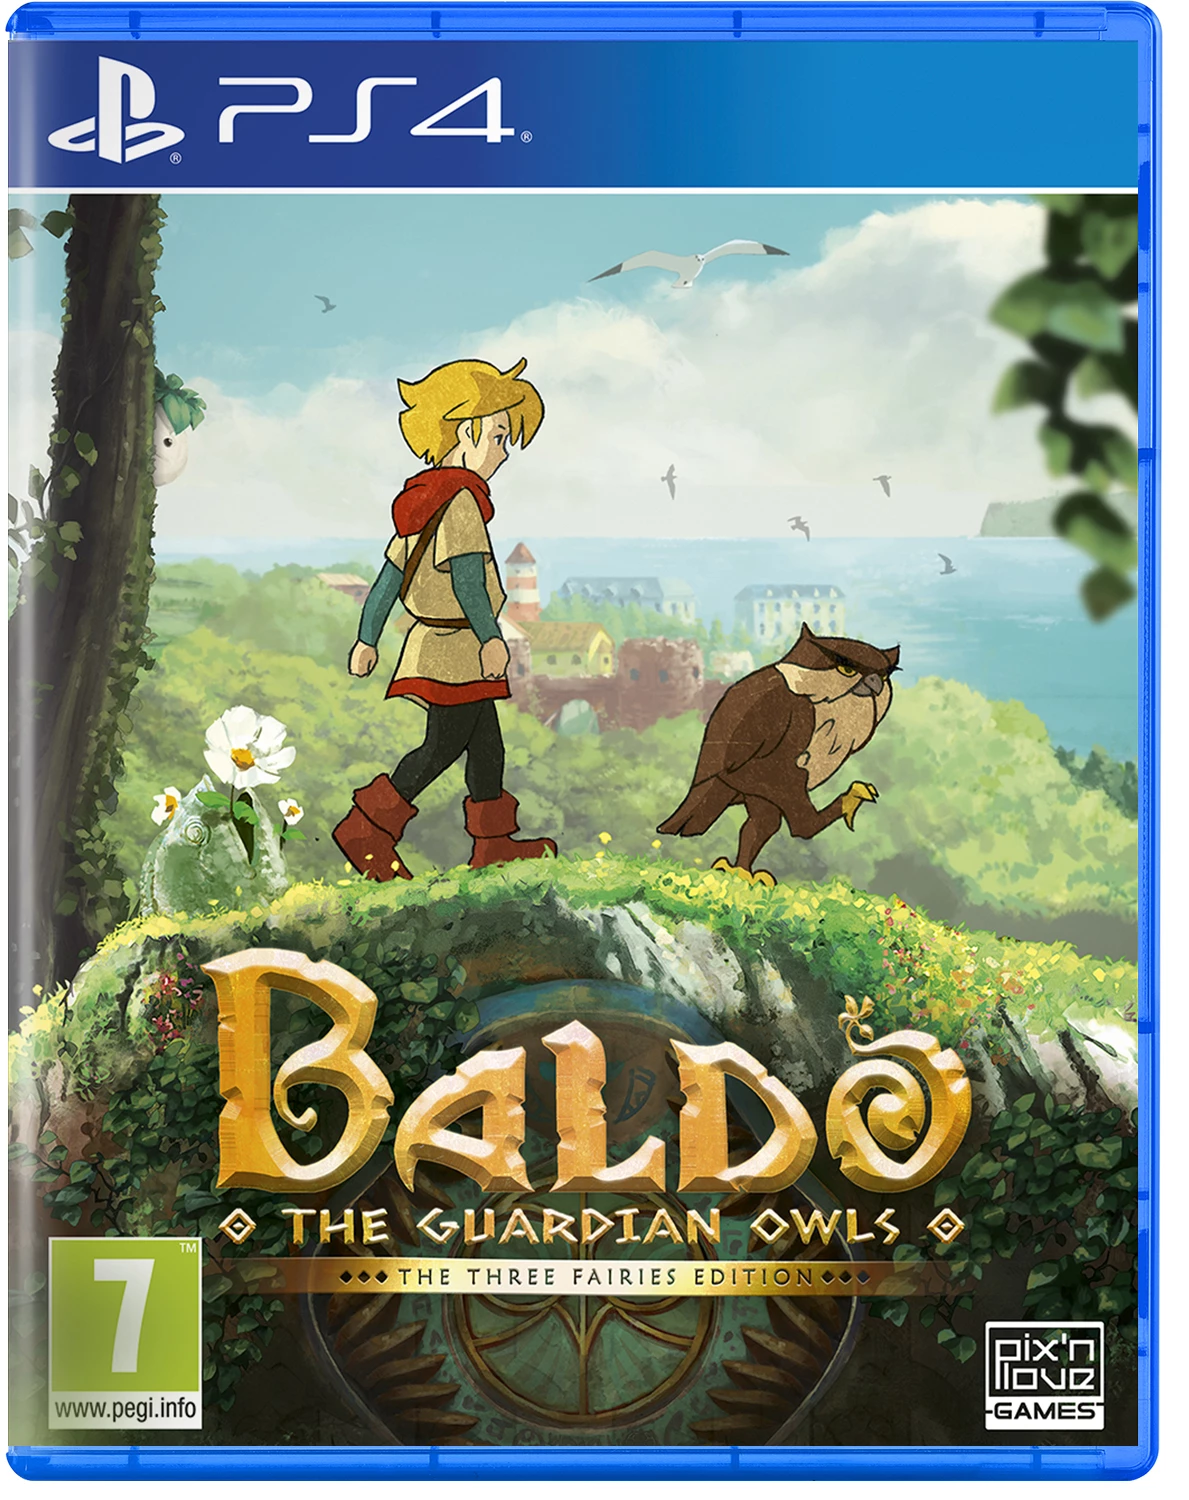 Baldo: The Guardian Owls - The Tree Fairies Edition (PS4), Pix'n Love Games